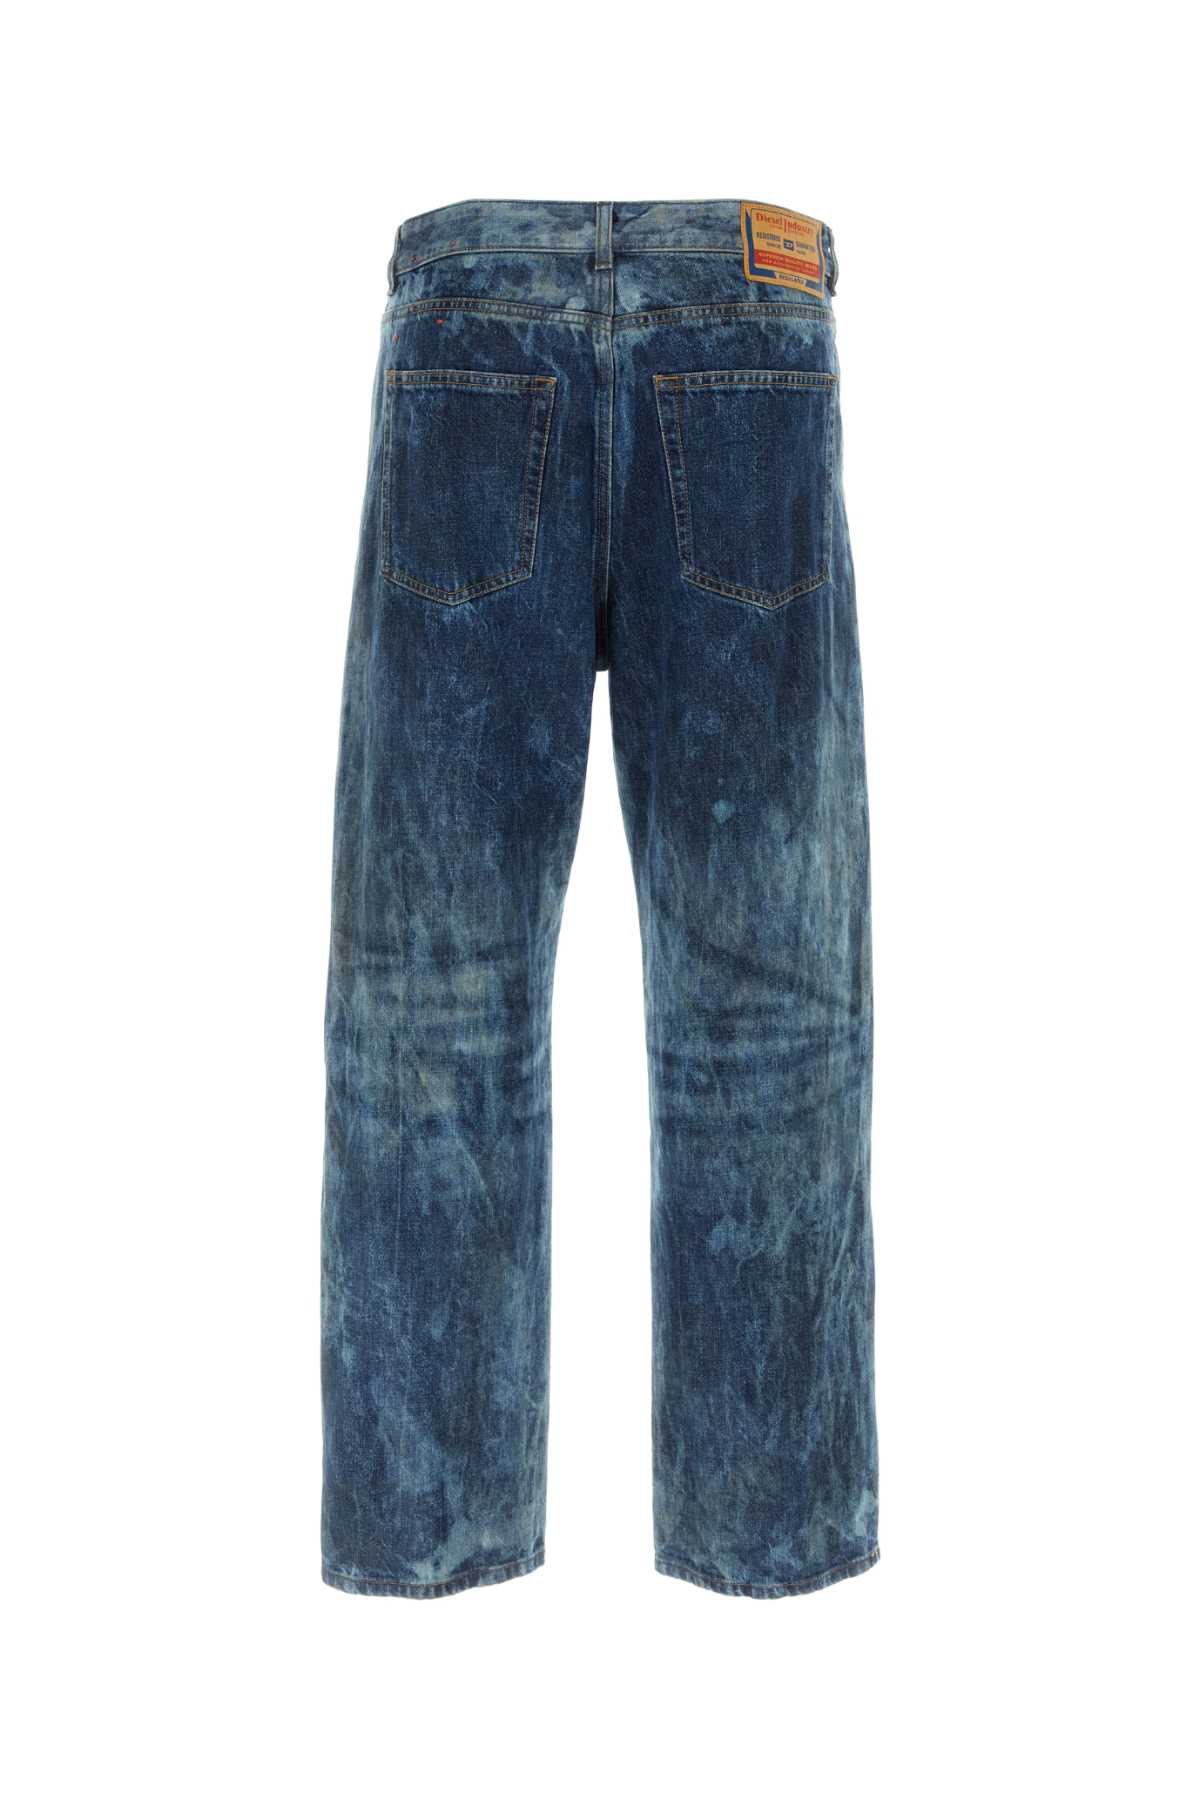 Diesel Denim D-rise 0pgax Jeans In 01